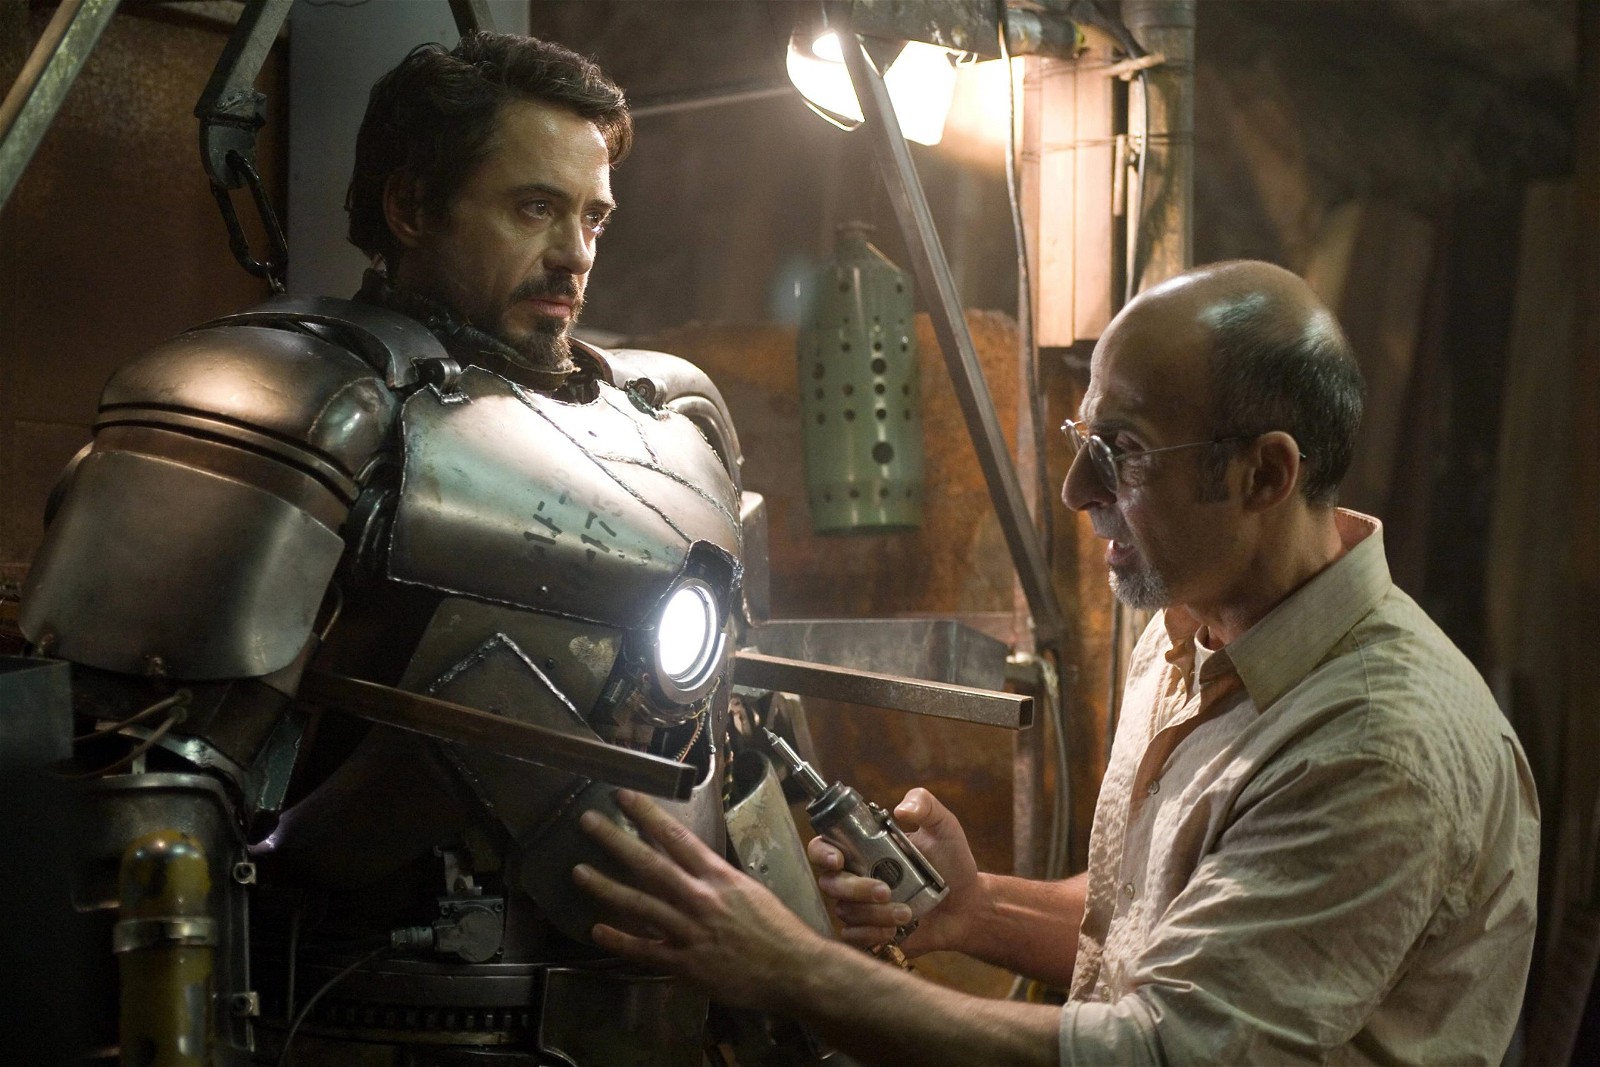 Yinsen helped Tony Stark in buildinh hi protype suot in Iron Man